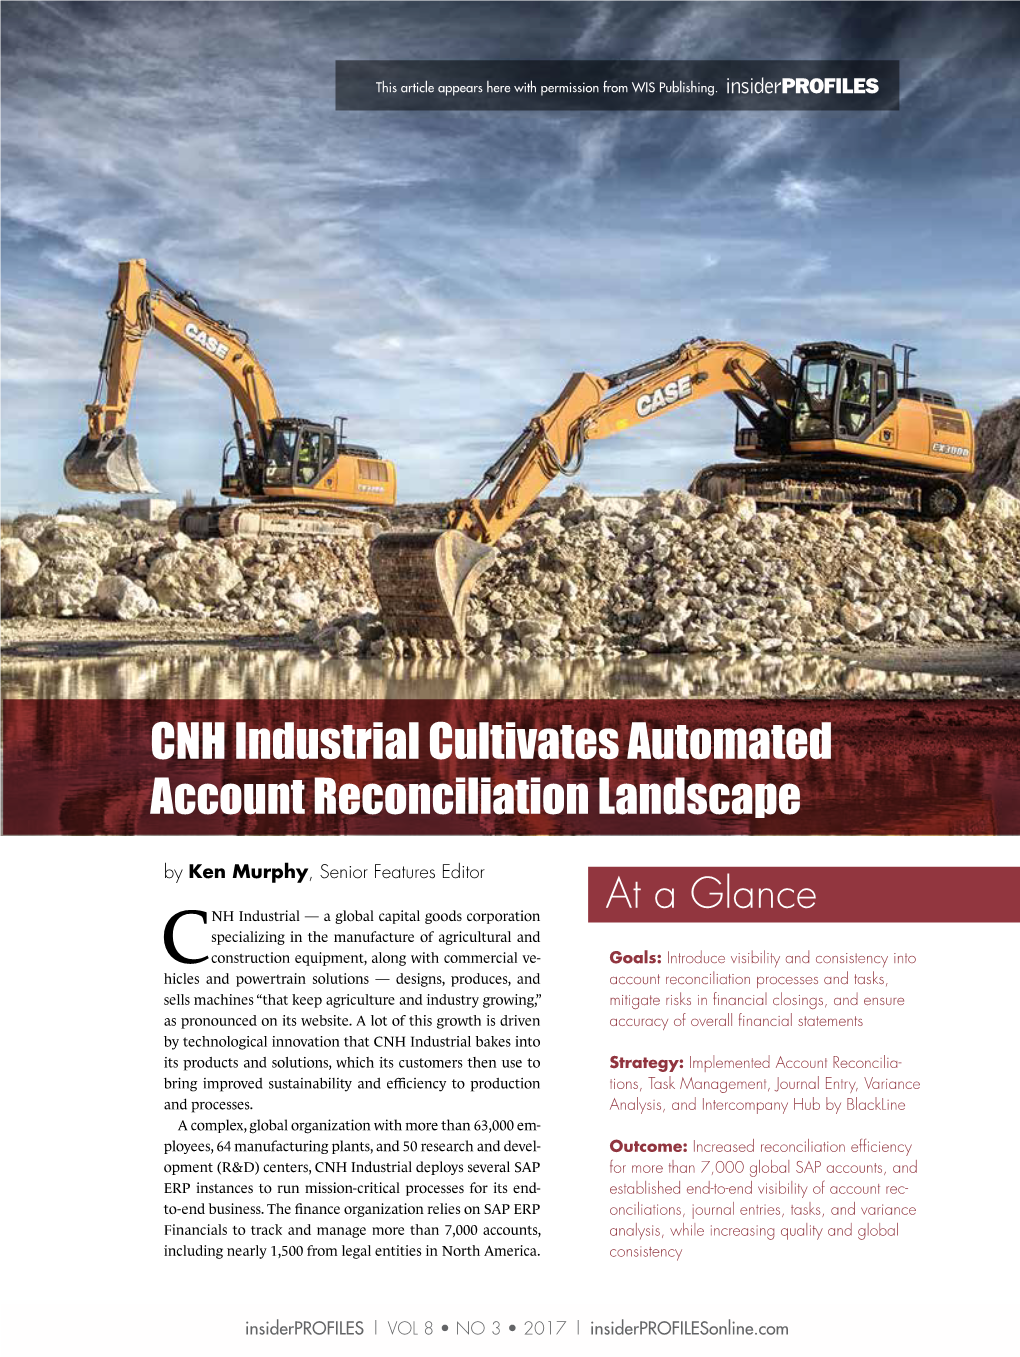 CNH Industrial Cultivates Automated Account Reconciliation Landscape